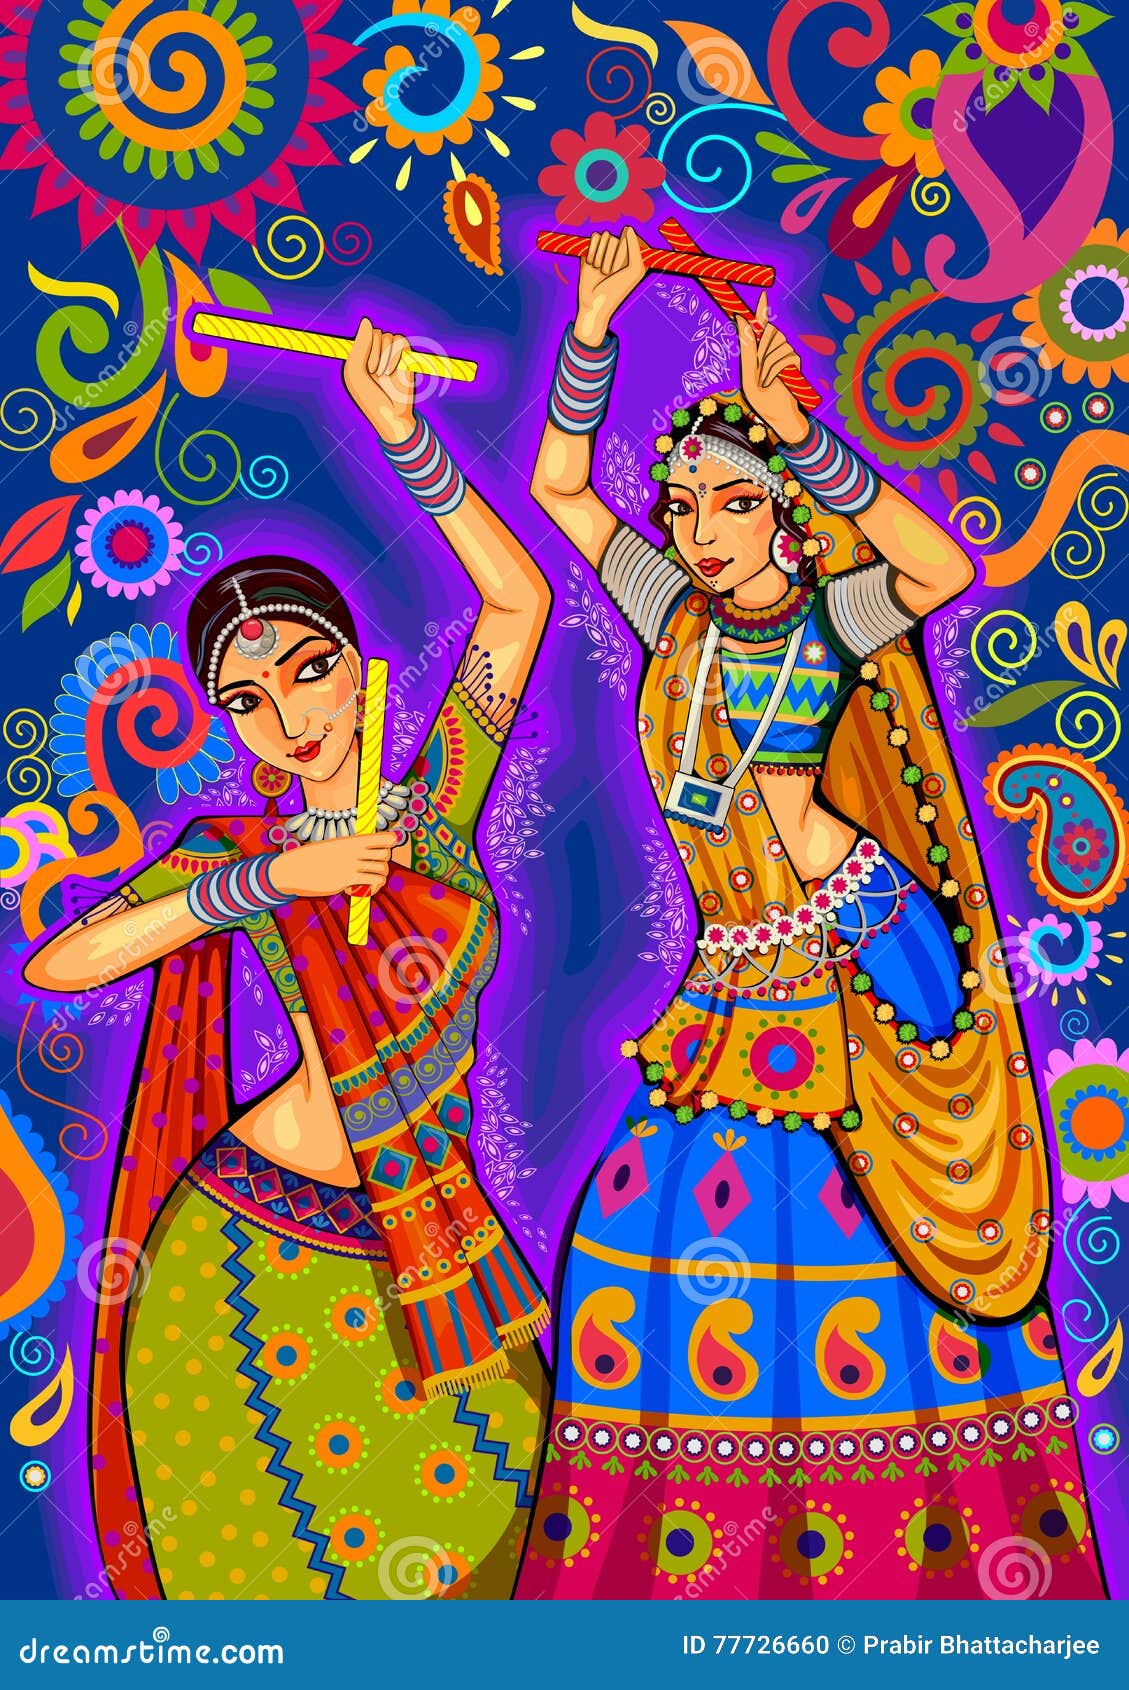 Navratri Special Dandiya Drawing Very Easy Step By Step / Dandiya Drawing /  Dandiya Night Drawing - YouTube